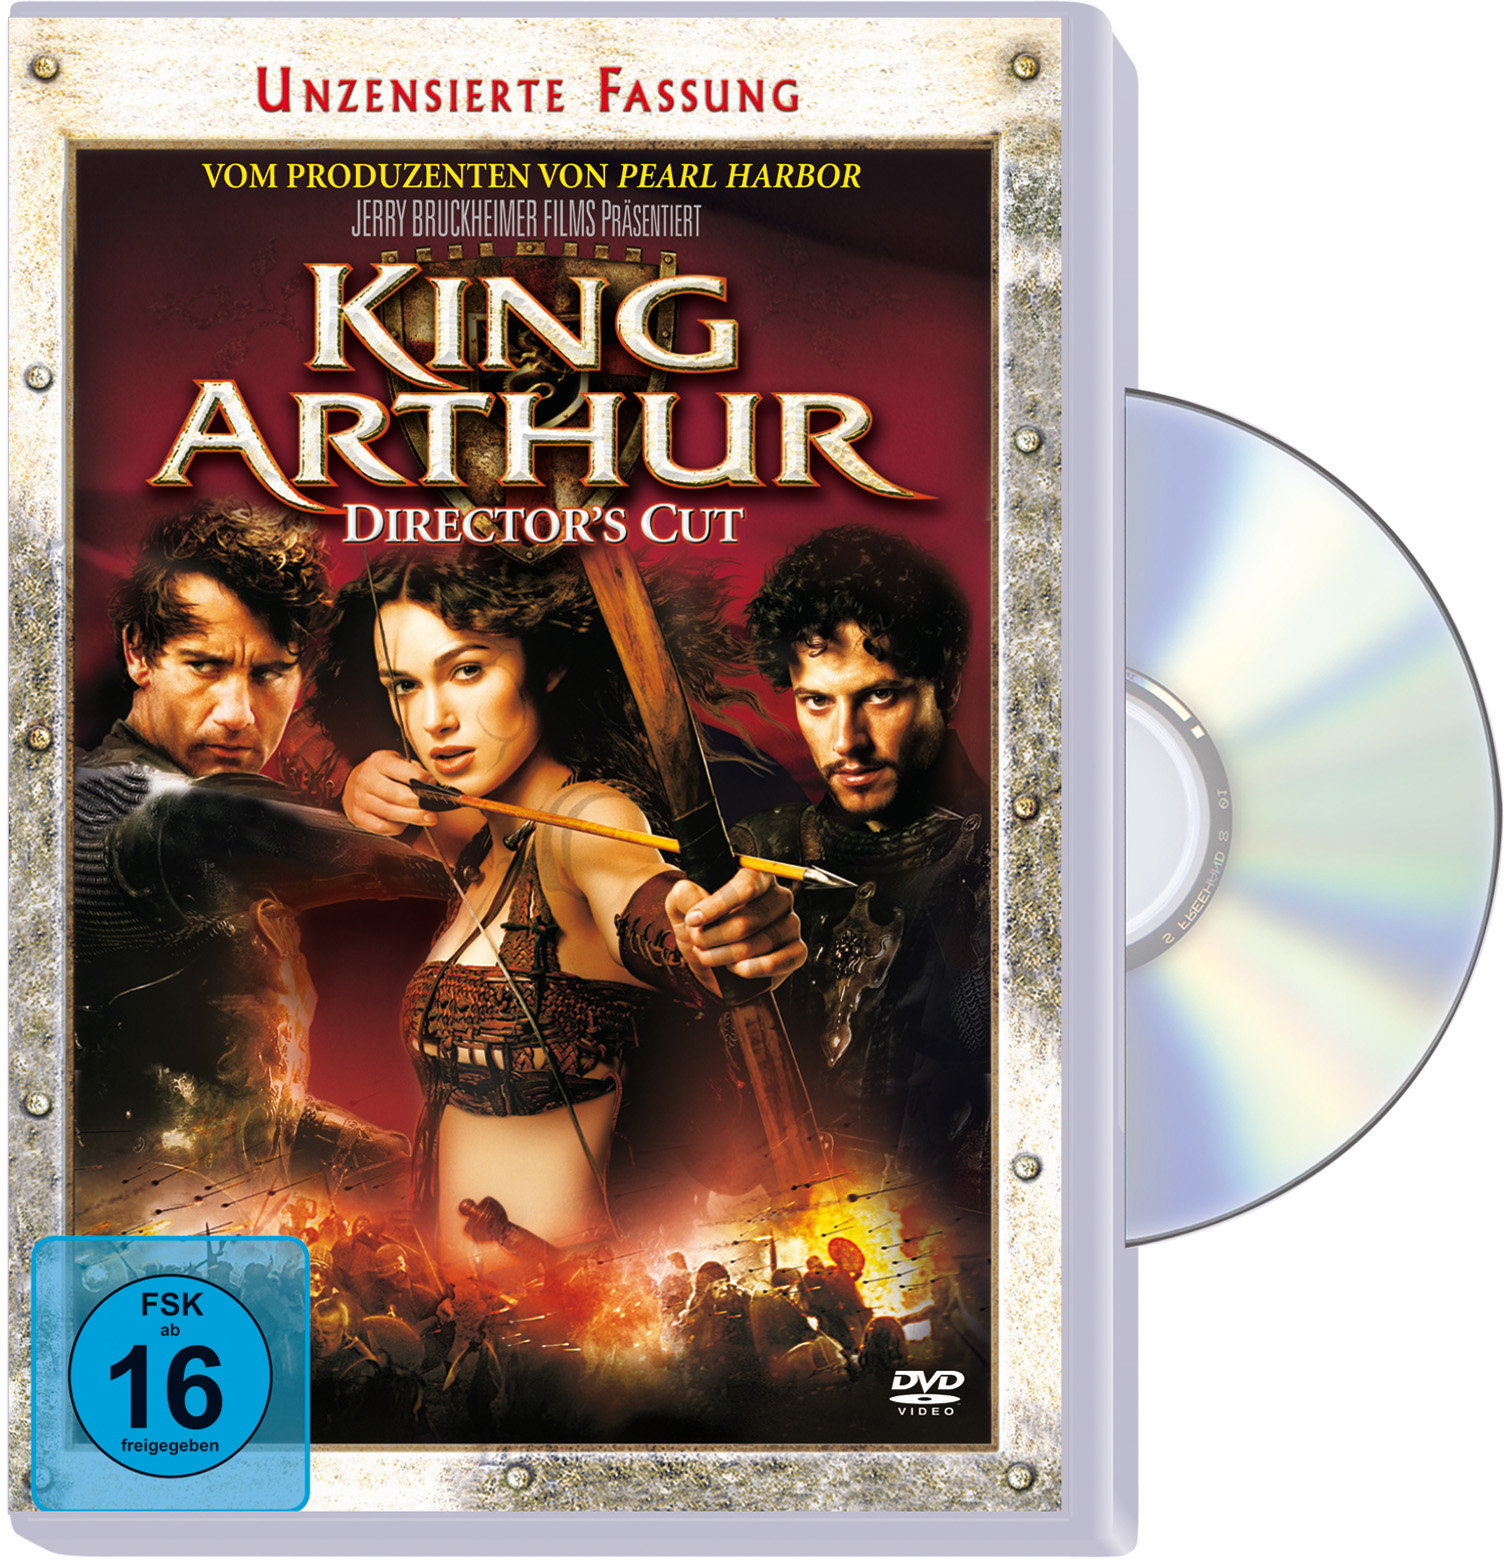 DVD Arthur King (Director’s Cut)